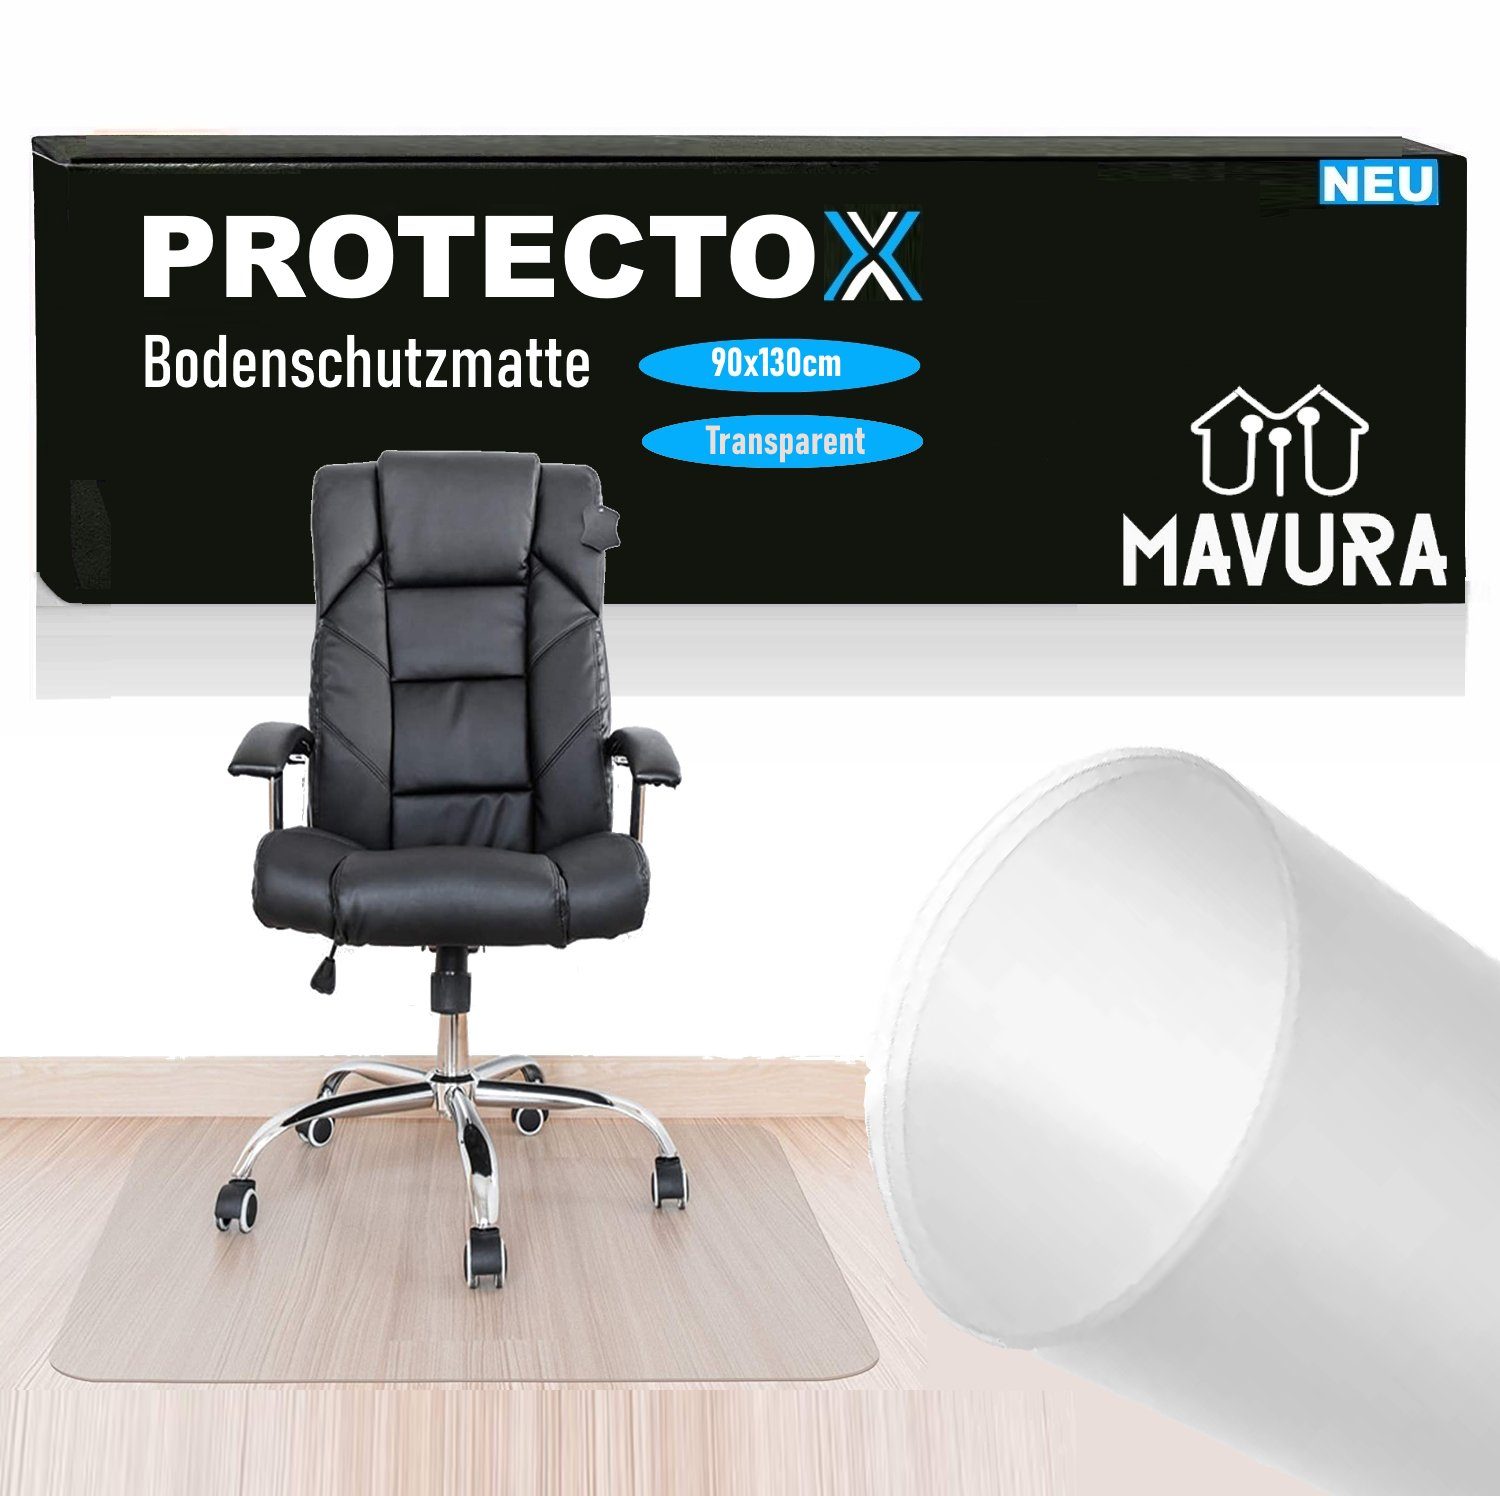 MAVURA Bodenschutzmatte PROTECTOX Bürostuhl Unterlage Transparent